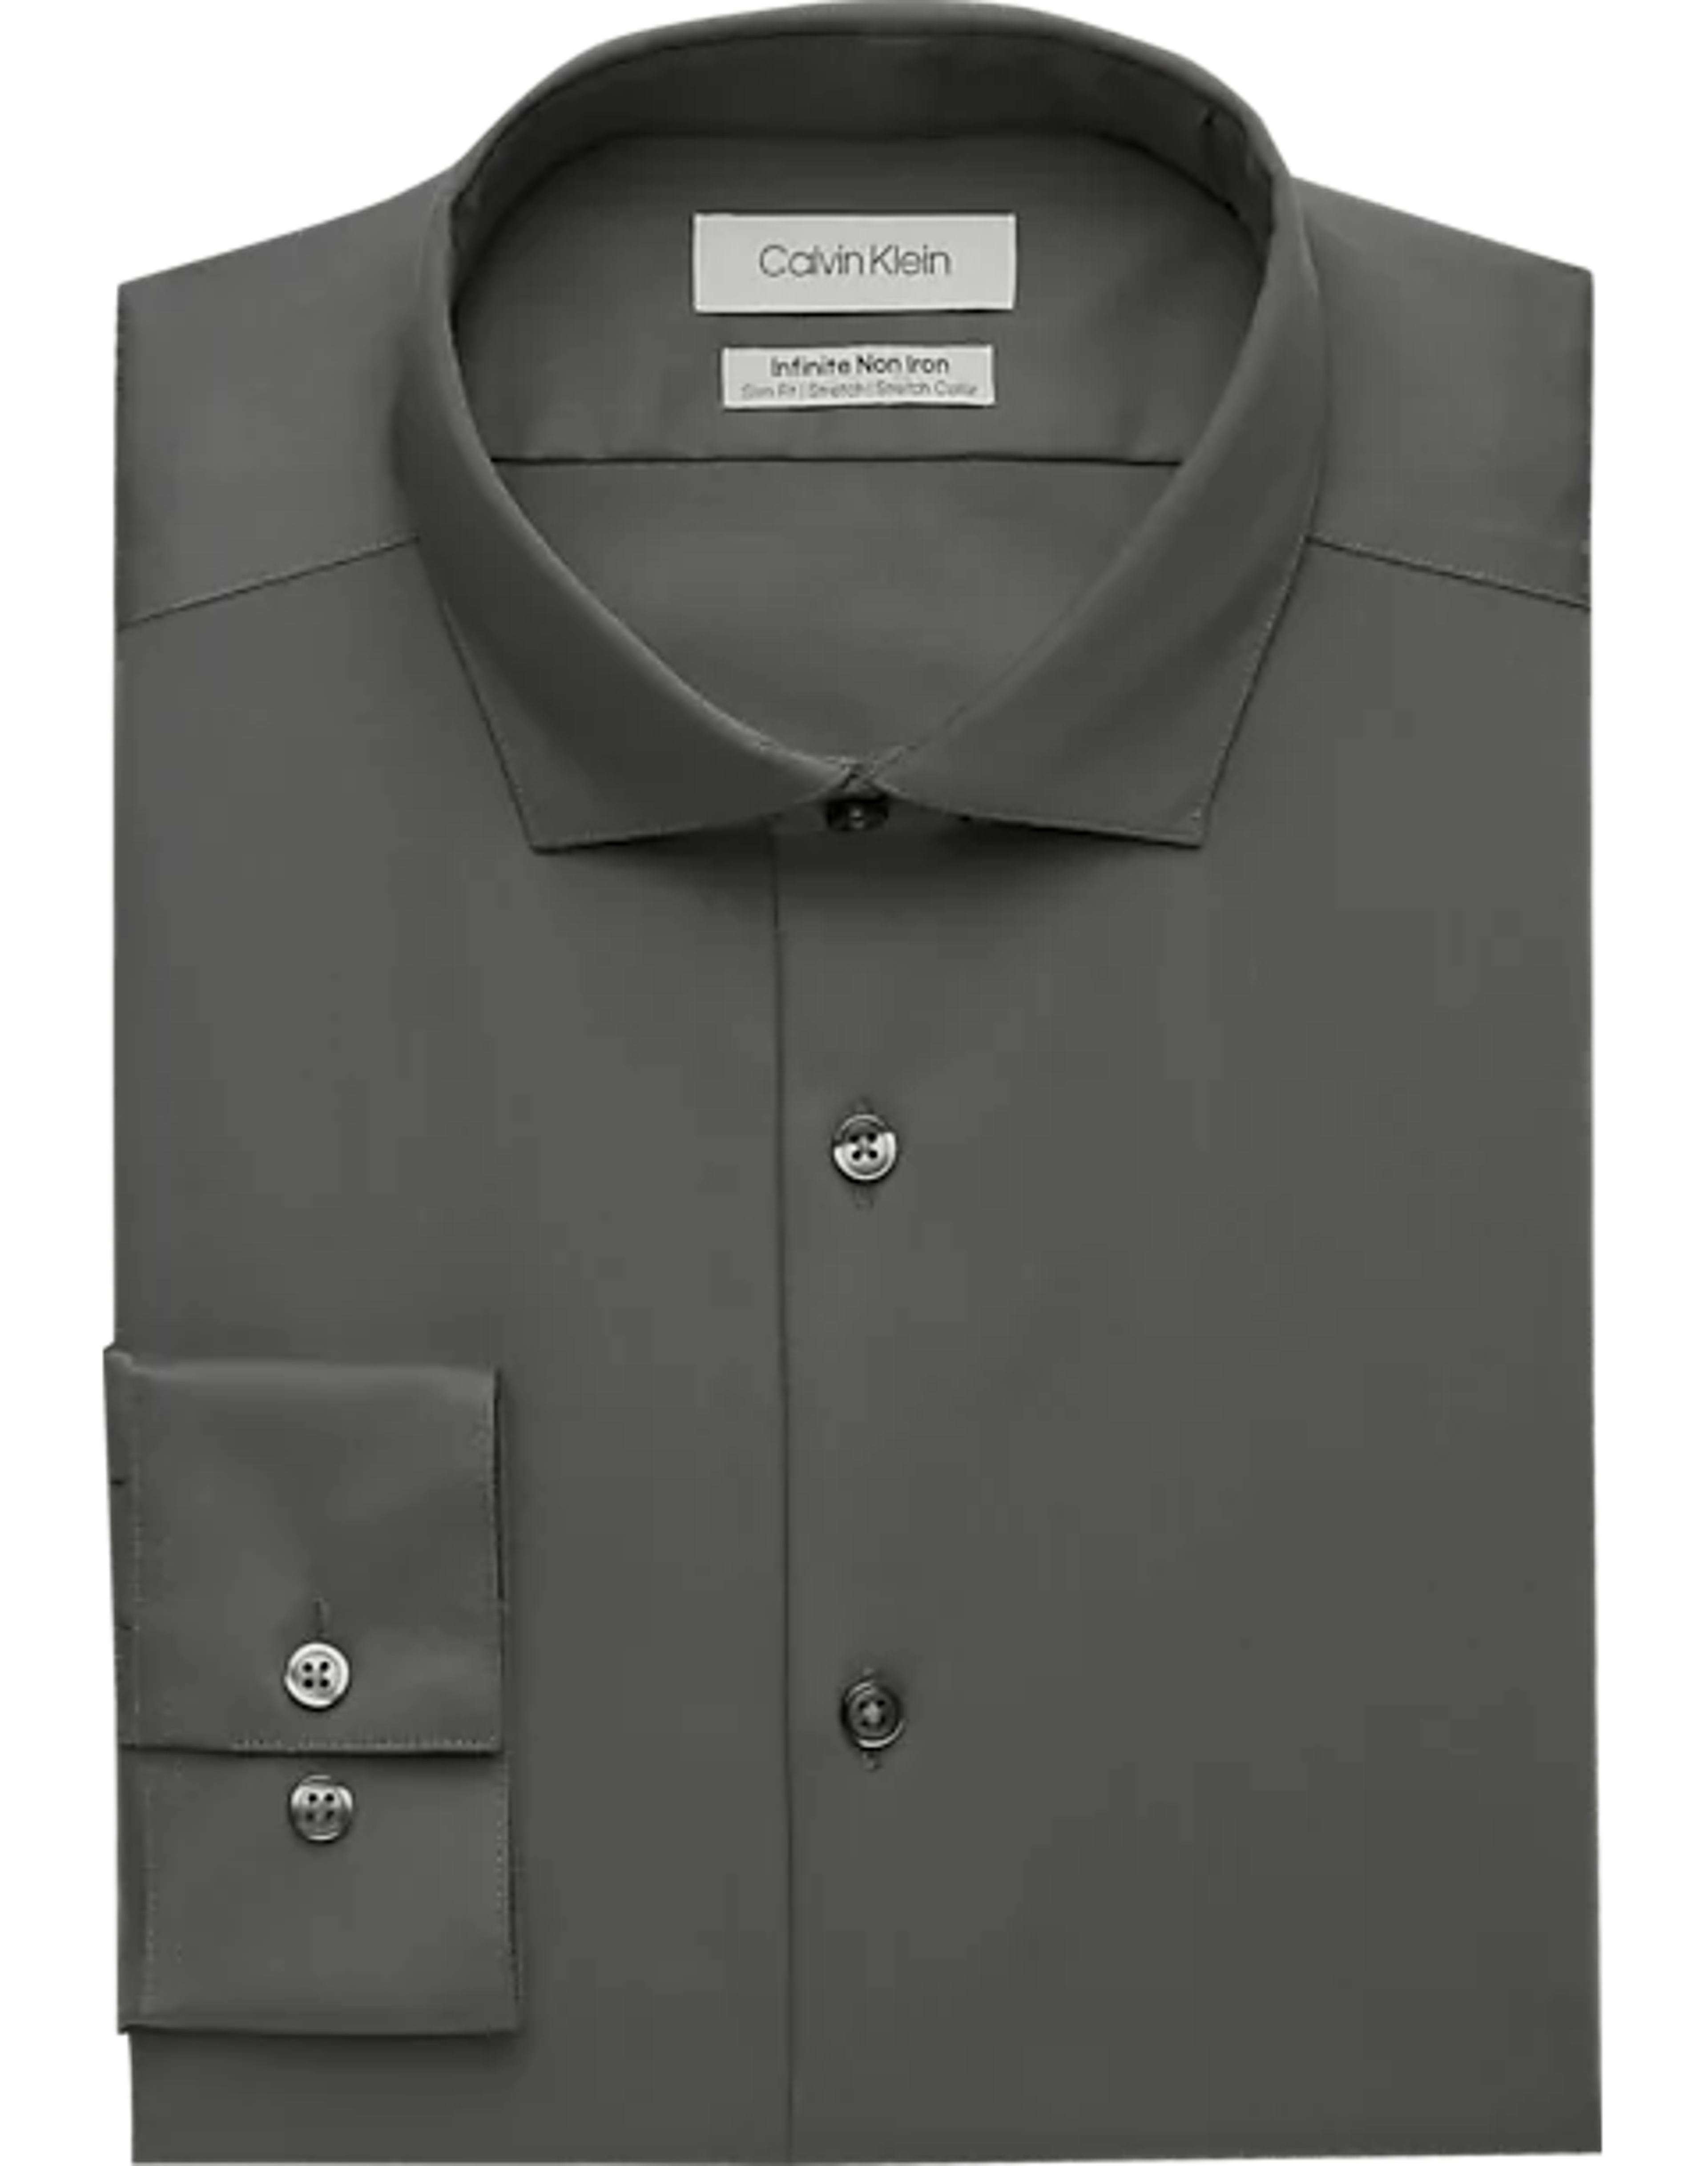 Calvin Klein Infinite Non-Iron Slim Fit Stretch Dress Shirt, Charcoal Gray - Men's Shirts | Men's Wearhouse